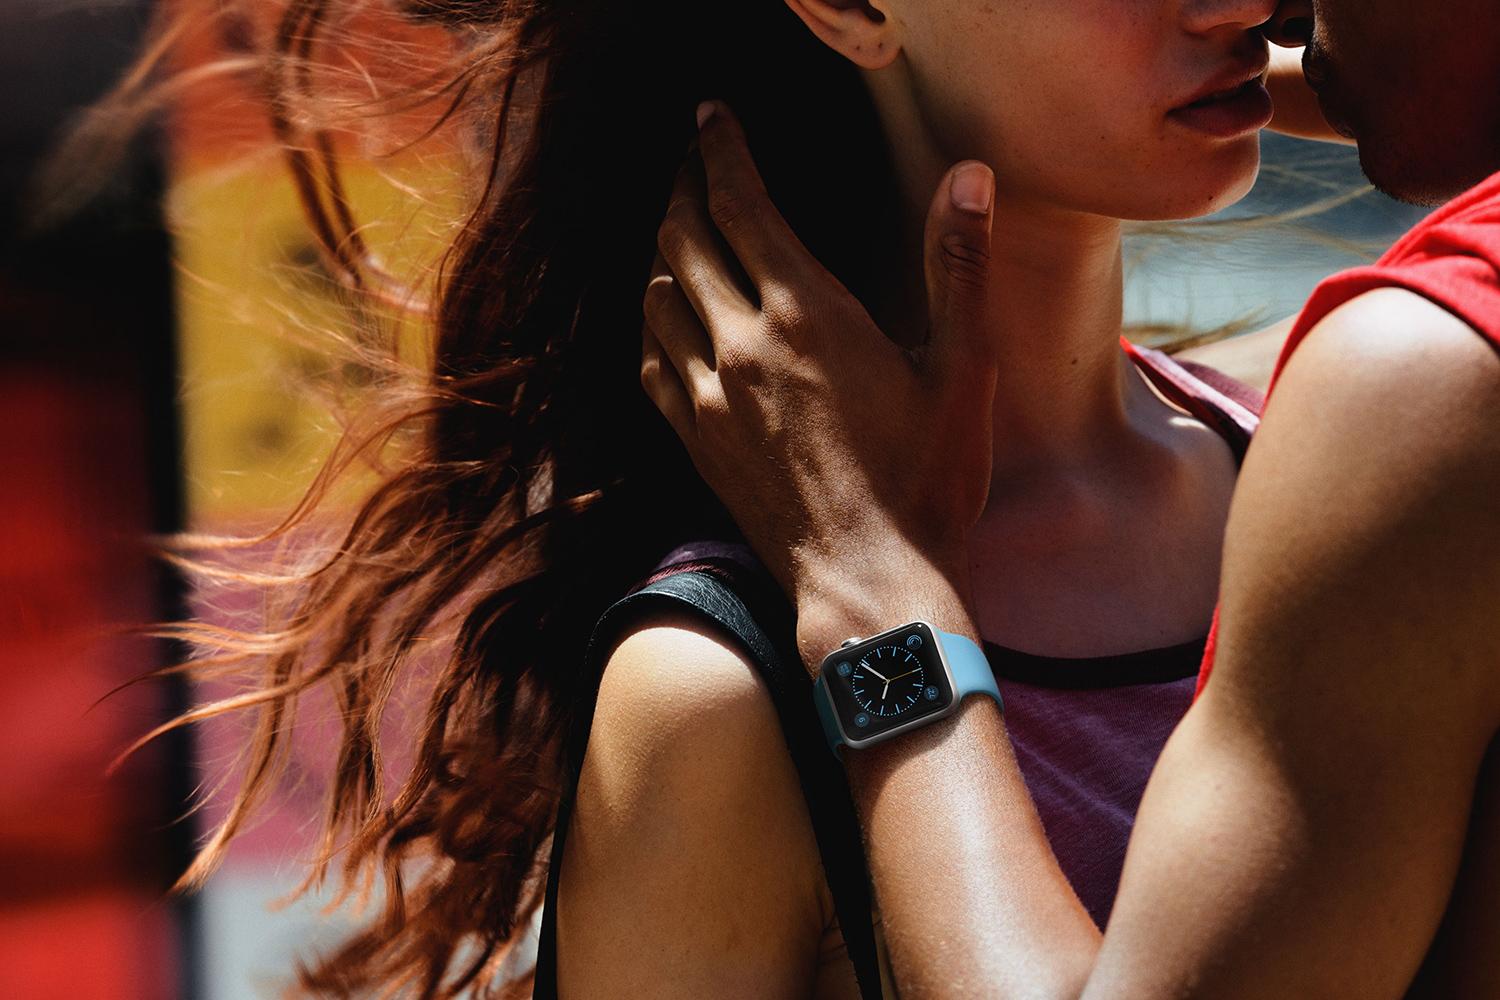 Apple Watch Designed by Marc Newson, not Jony Ive, Designer Says